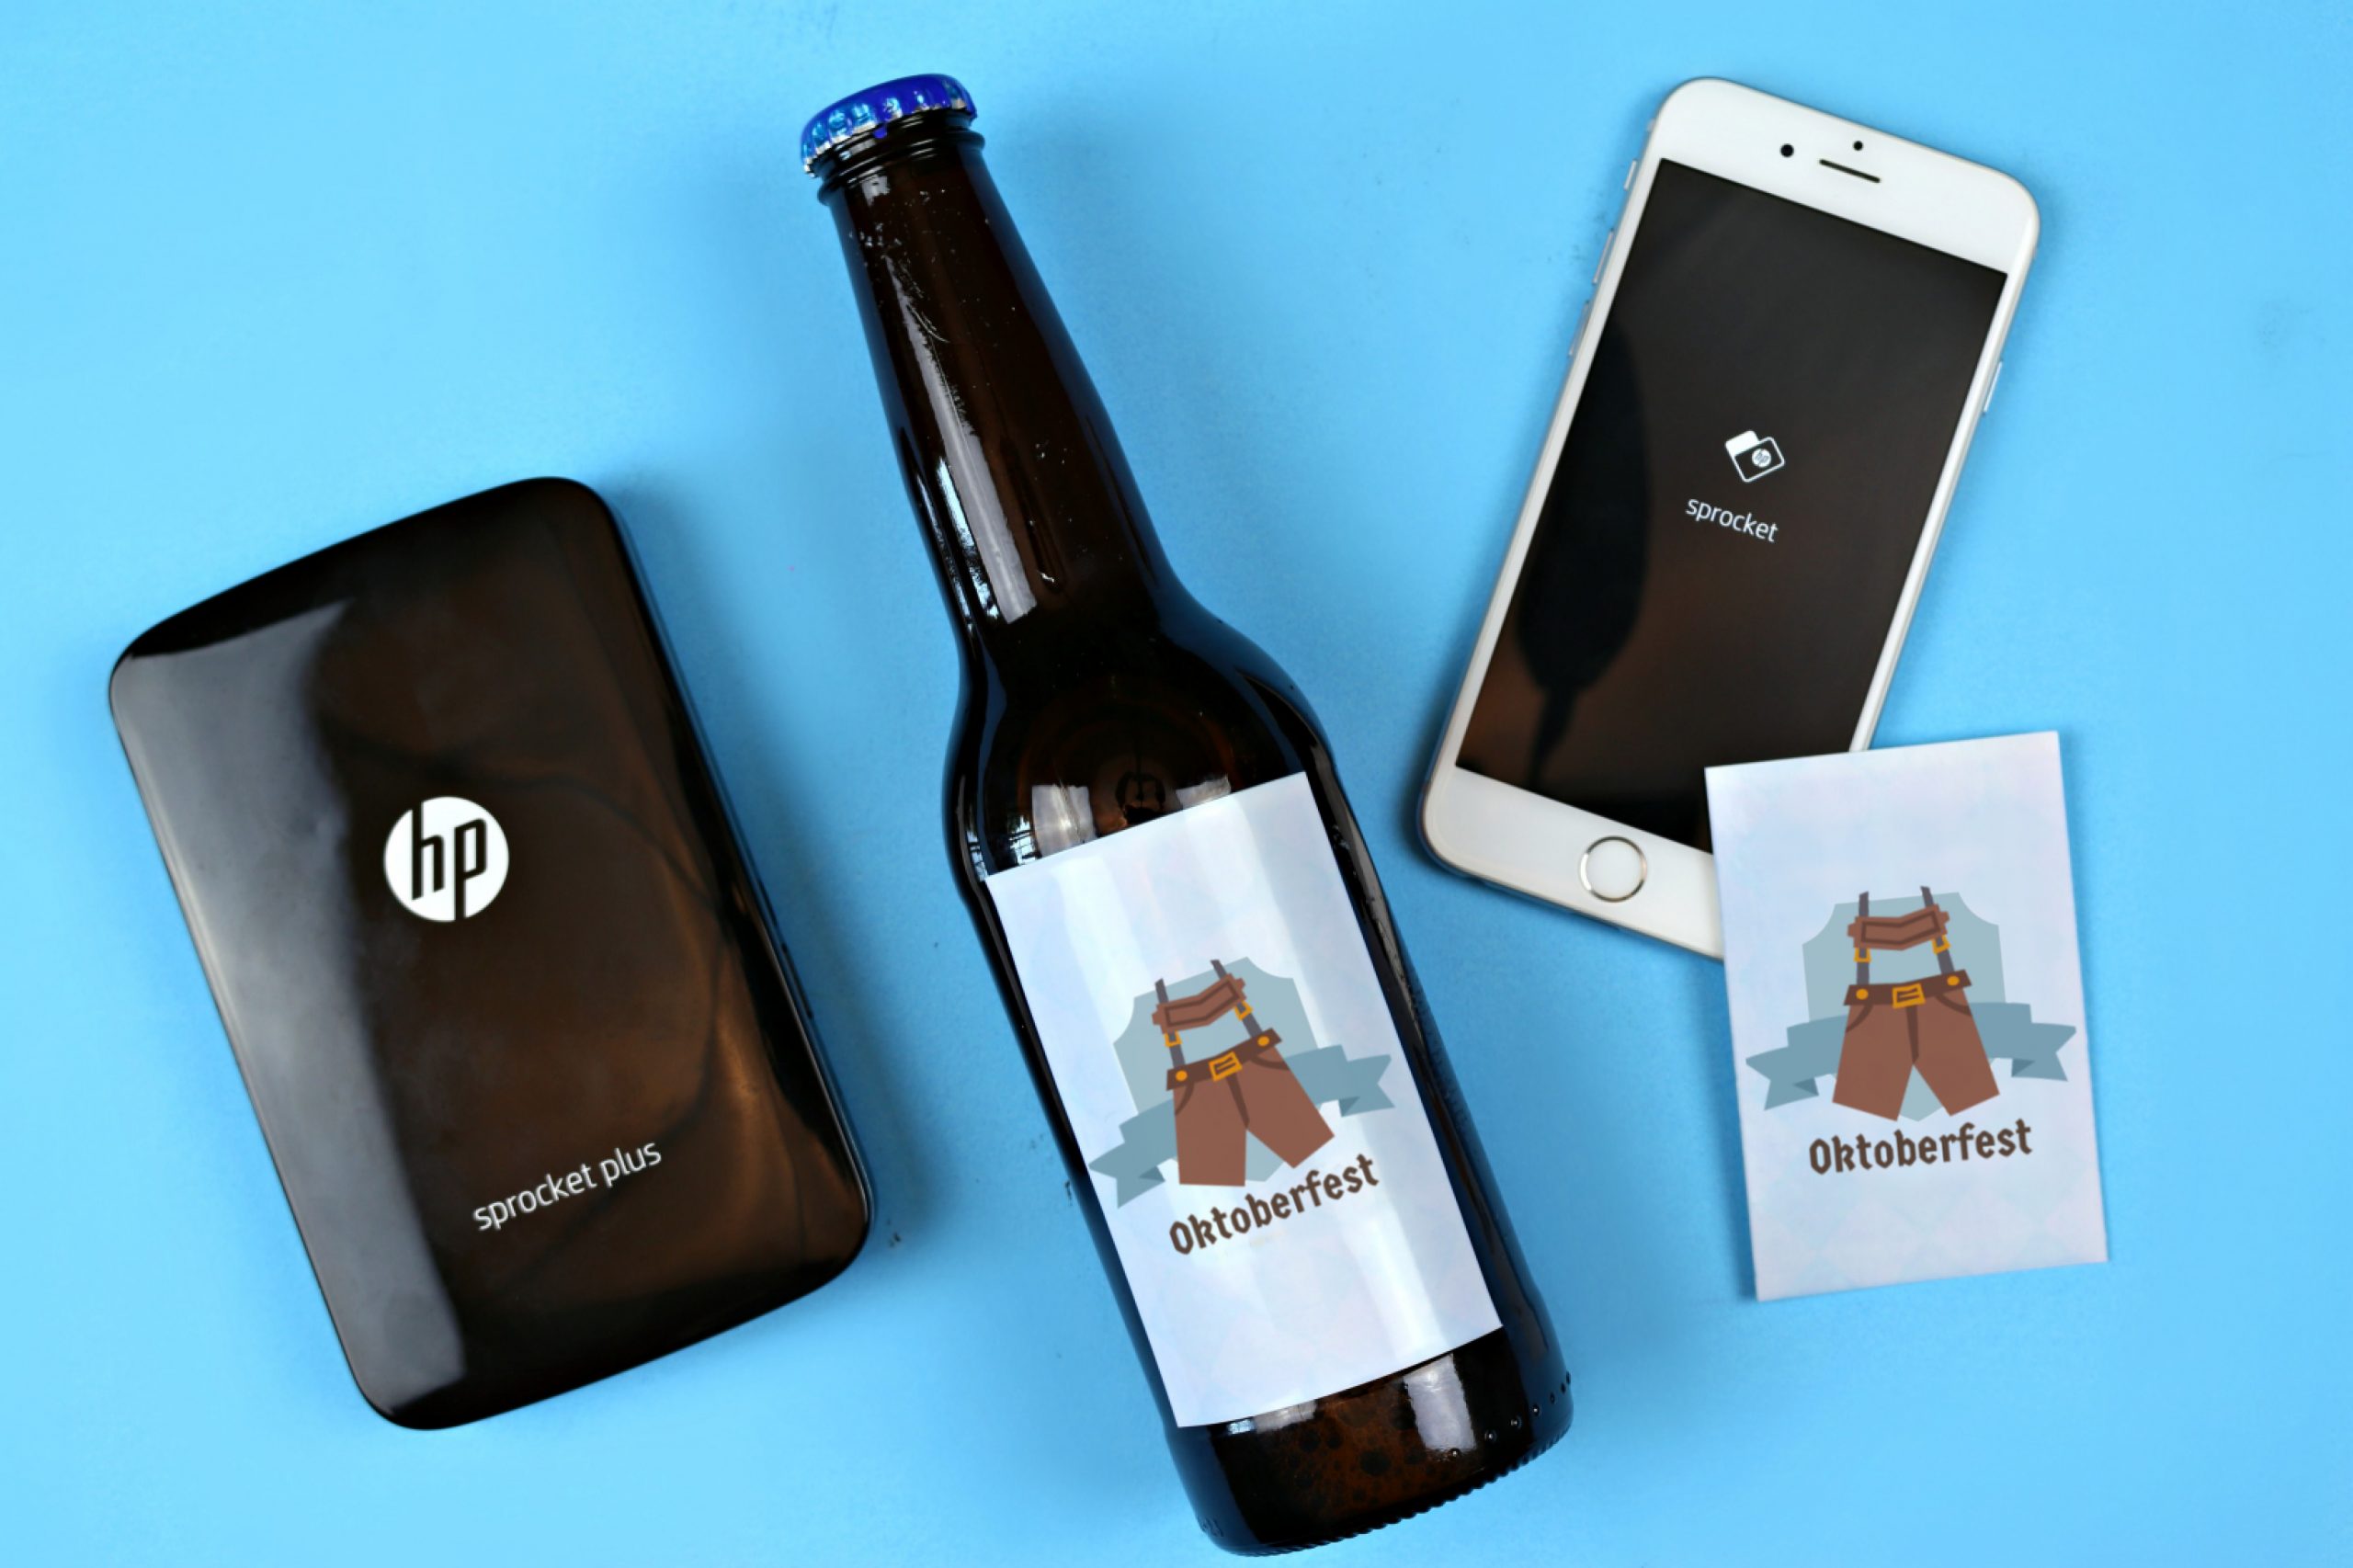 HP Sprocket, smartphone, Oktoberfest sticker and a beer bottle on a blue background